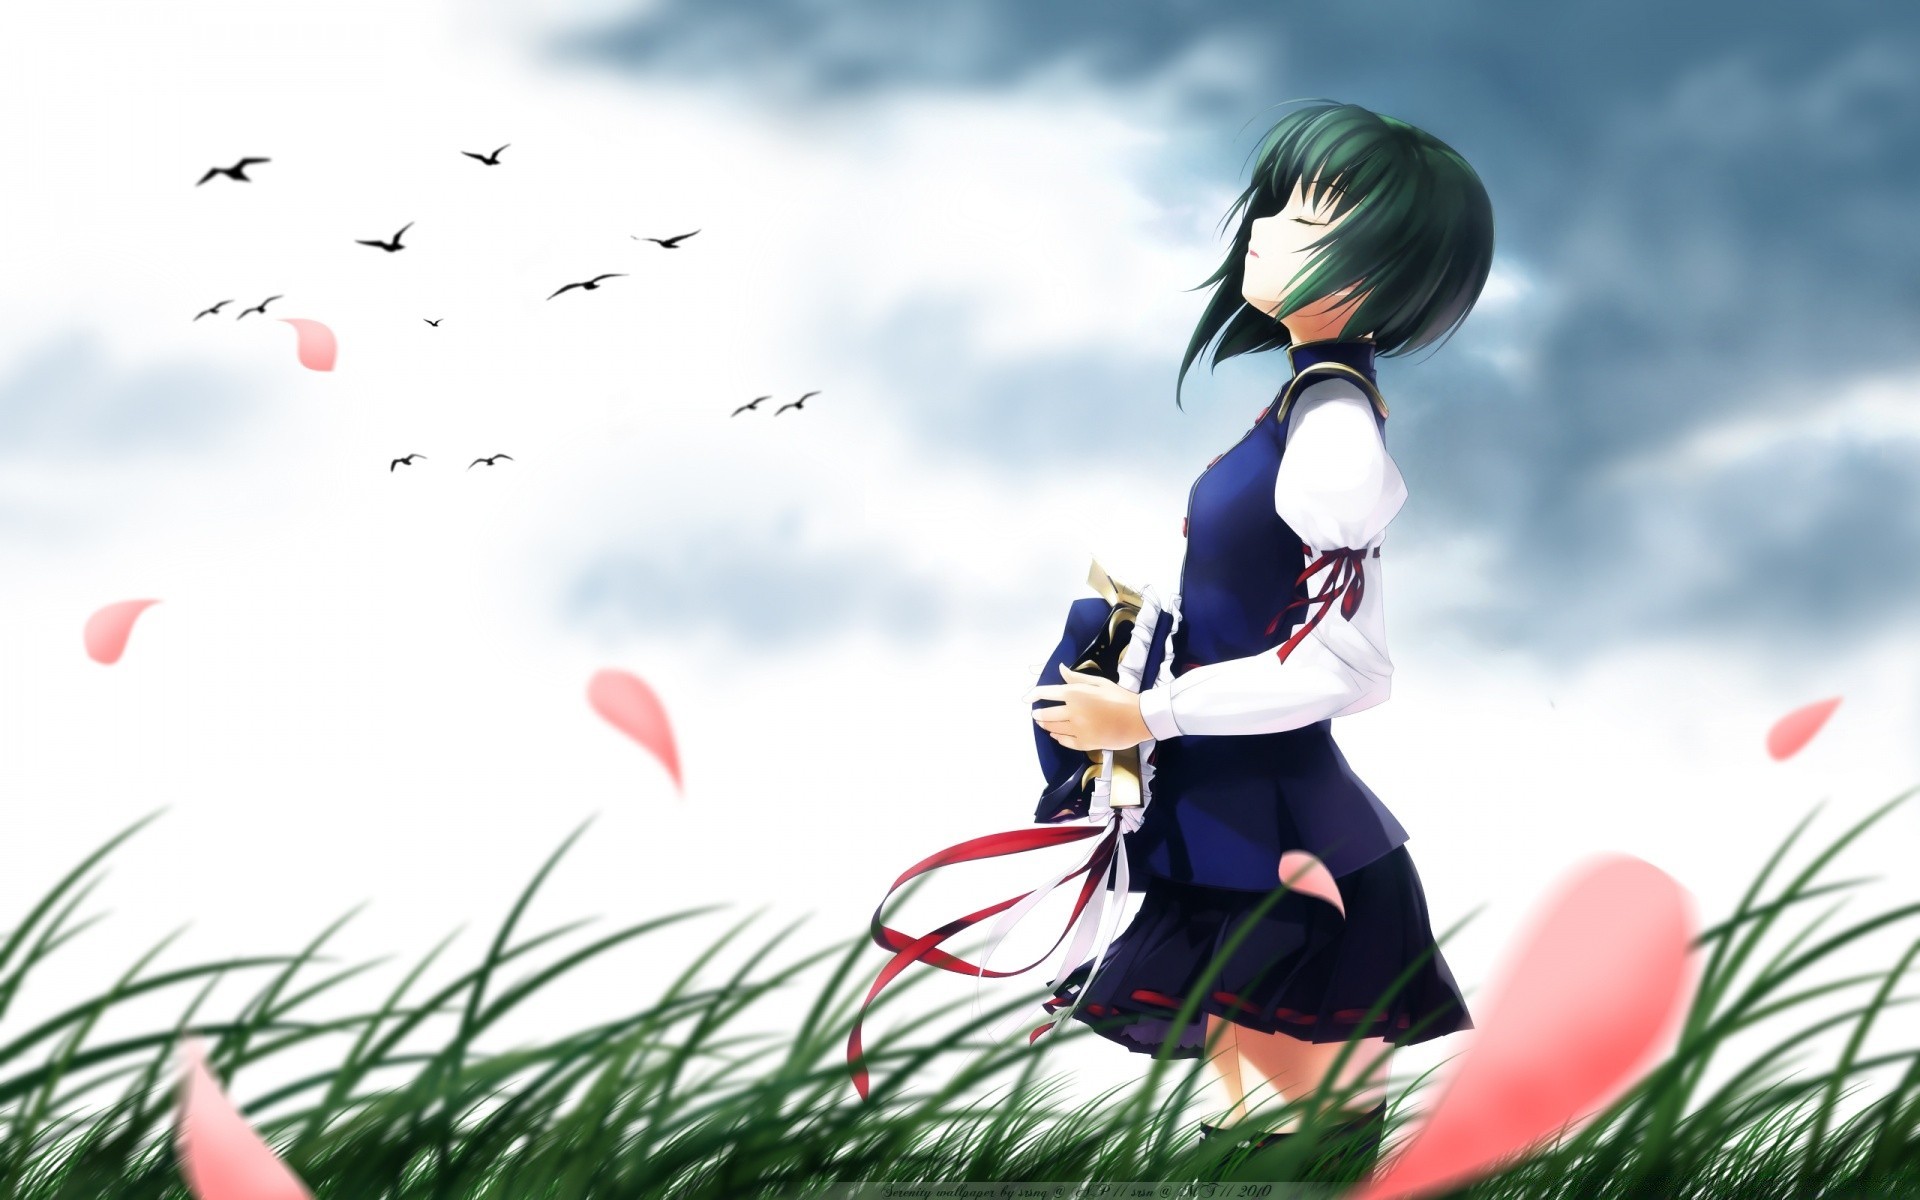 anime grass nature sky blur outdoors girl woman